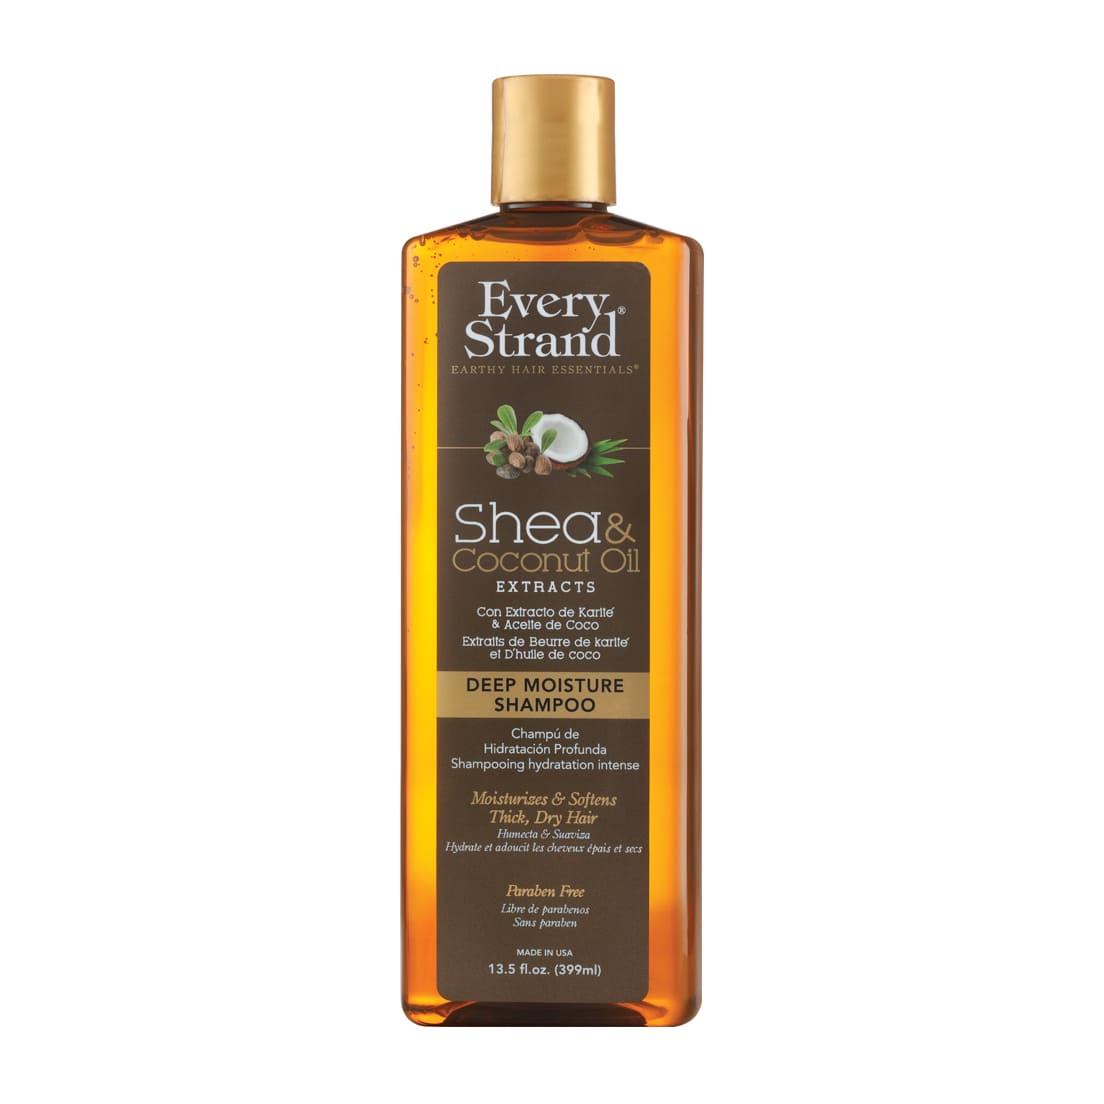 Every Strand Shea & Coconut Oil Shampoo – 399ml - Bloom Pharmacy